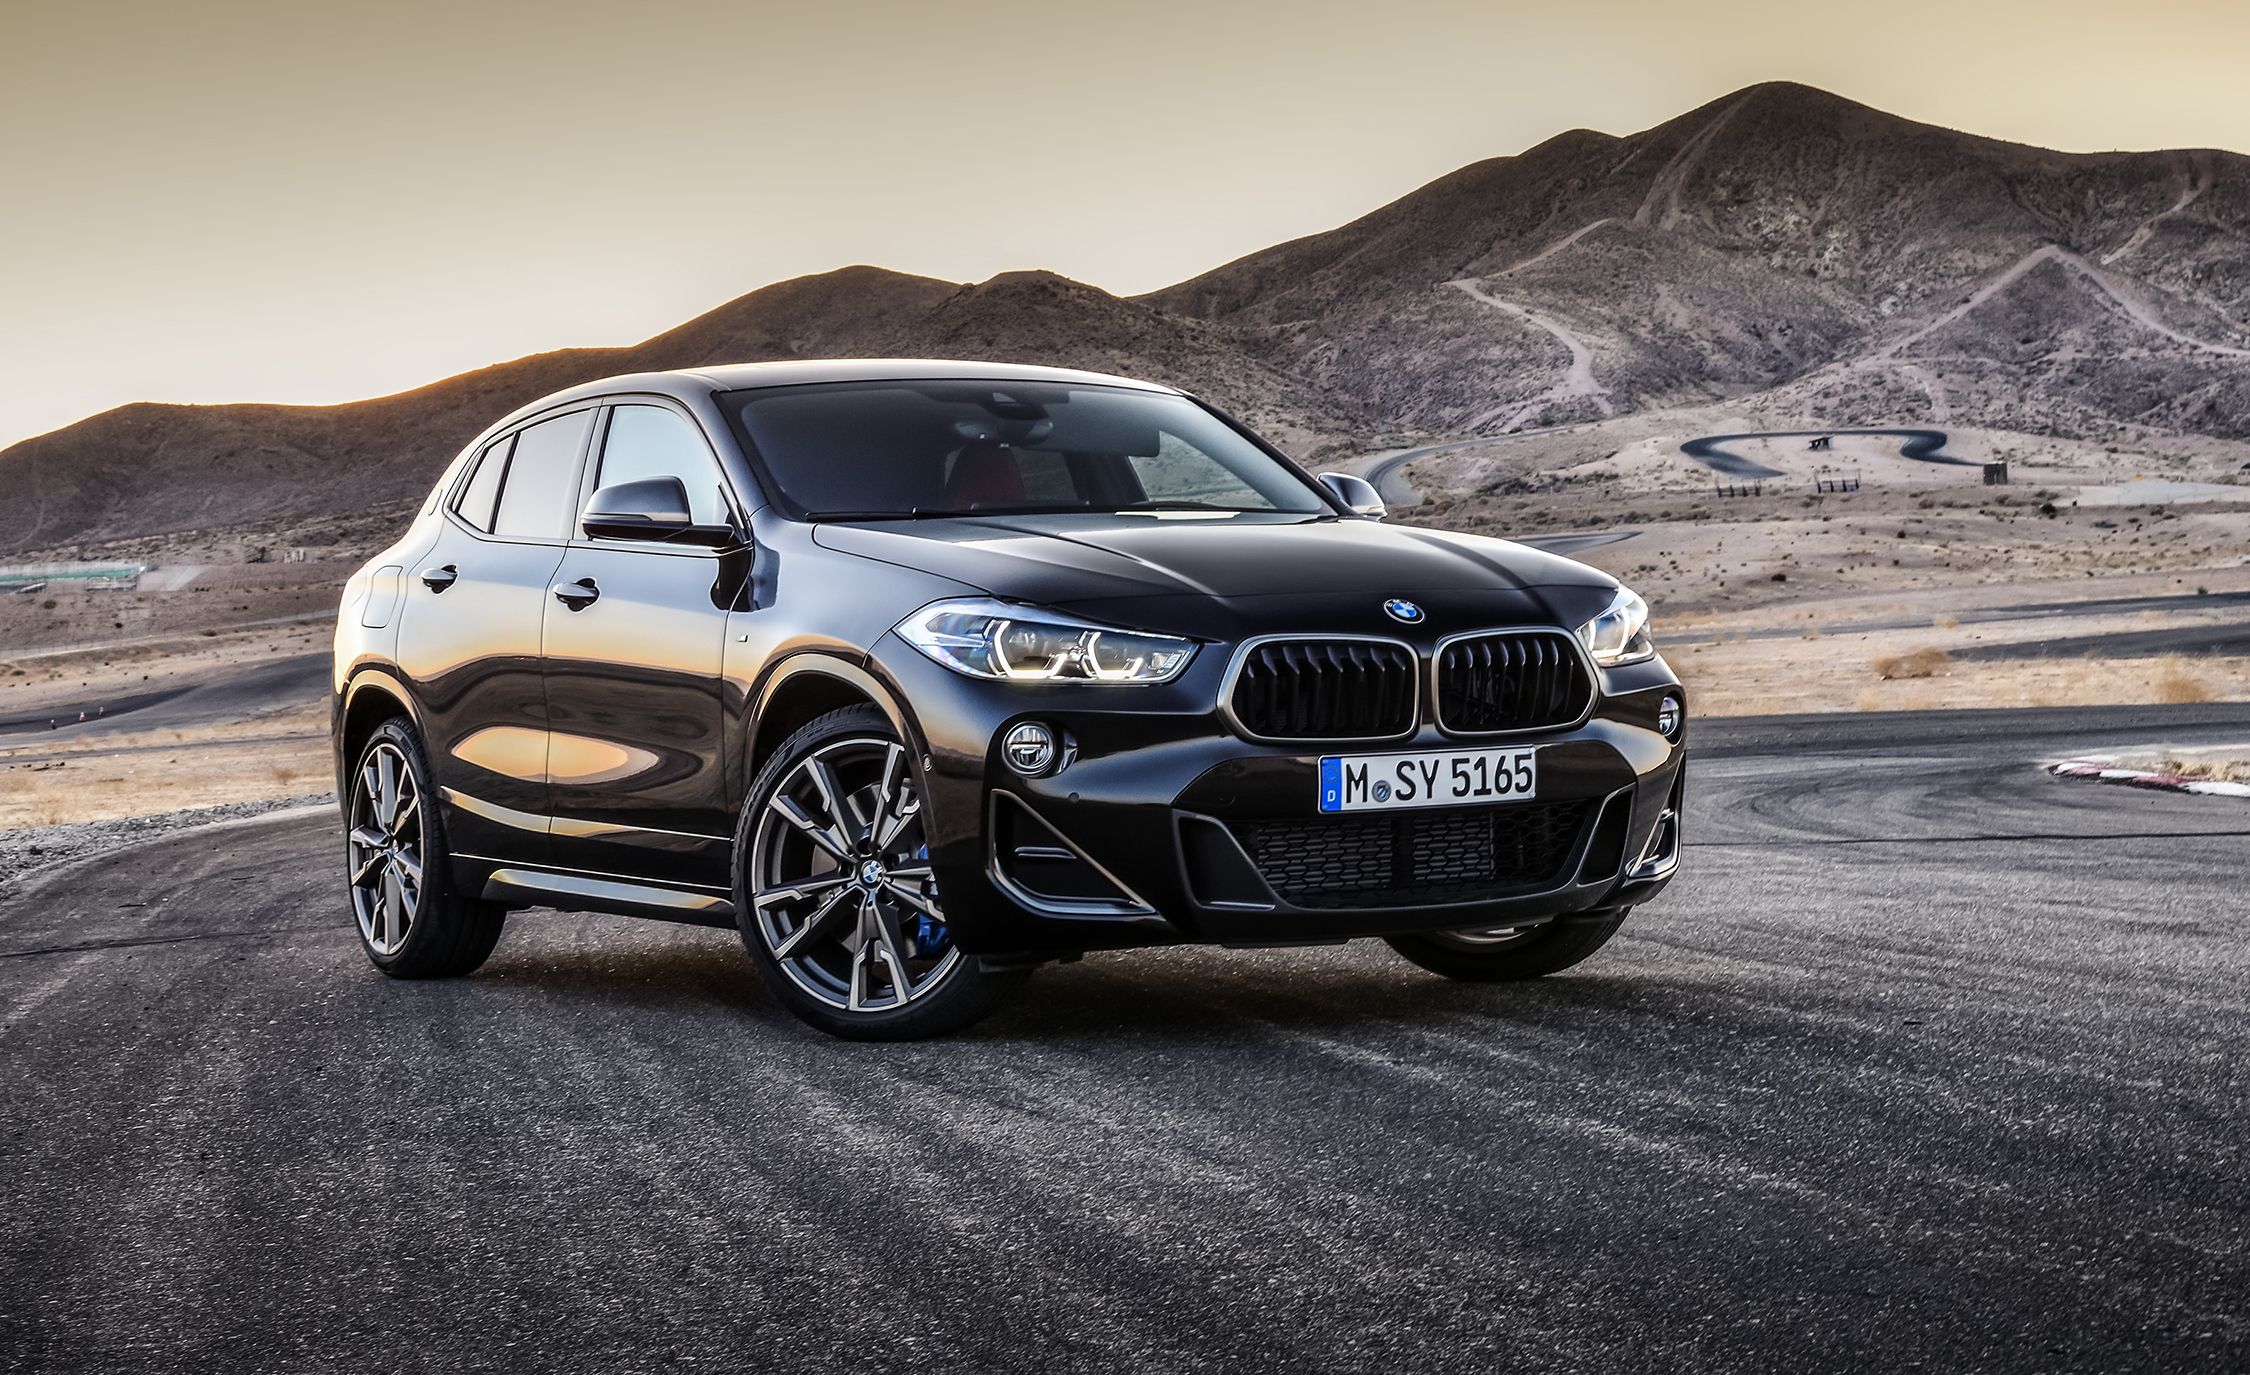 2019 BMW X2 M35i Packs a 302-HP Turbo Four, M Performance Upgrades